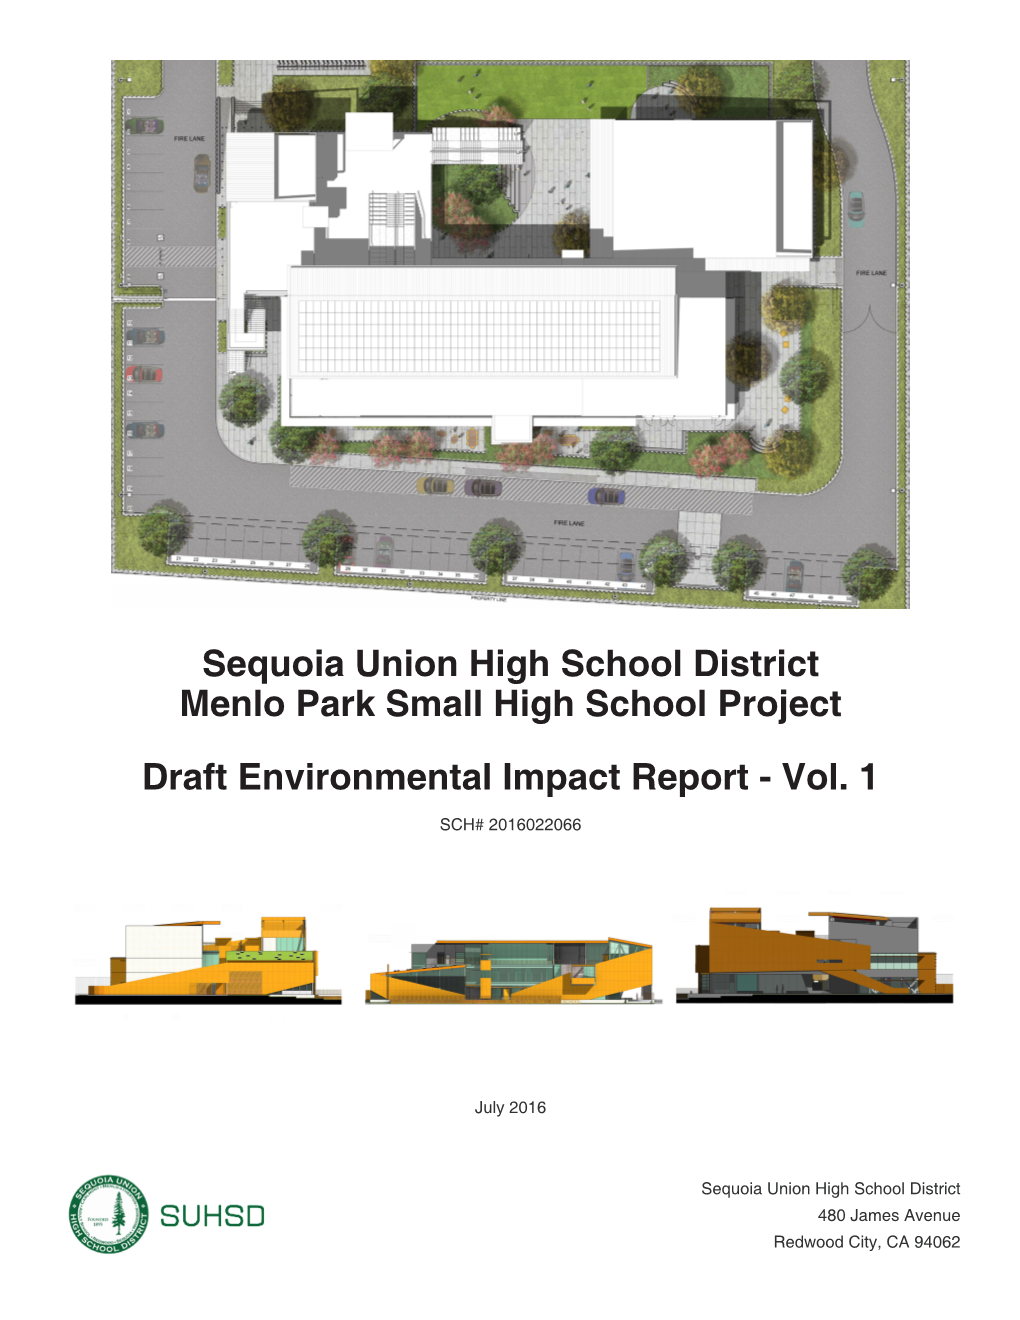 Sequoia Union High School District Menlo Park Small High School Project Draft Environmental Impact Report - Vol